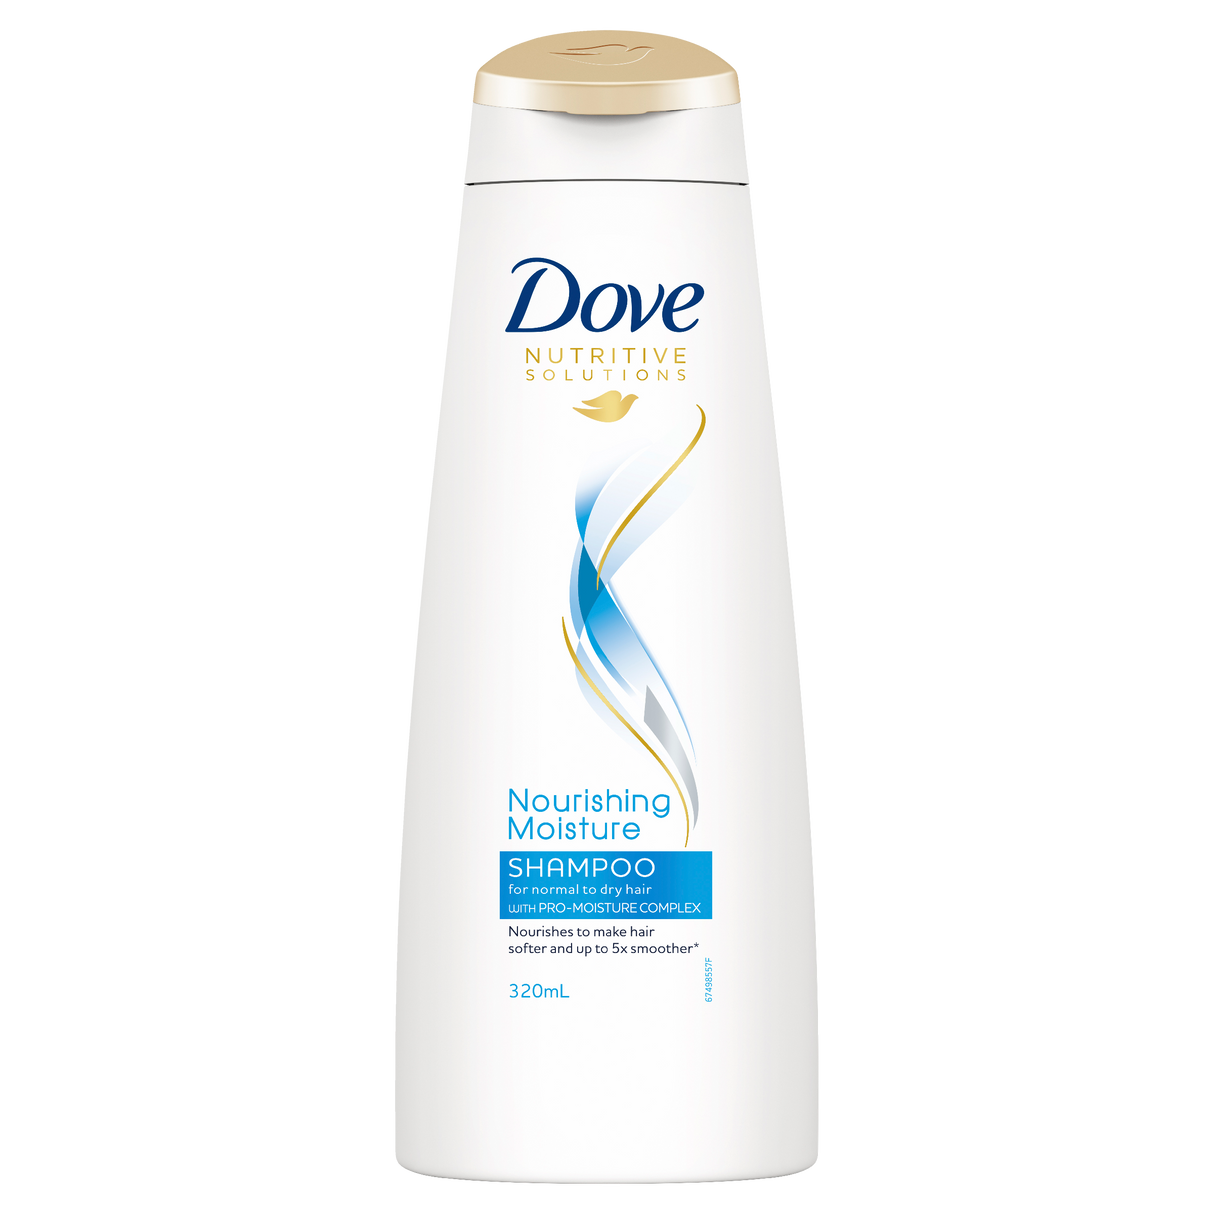 Dove Nutritive Solutions Shampoo Daily Moisture 320ml